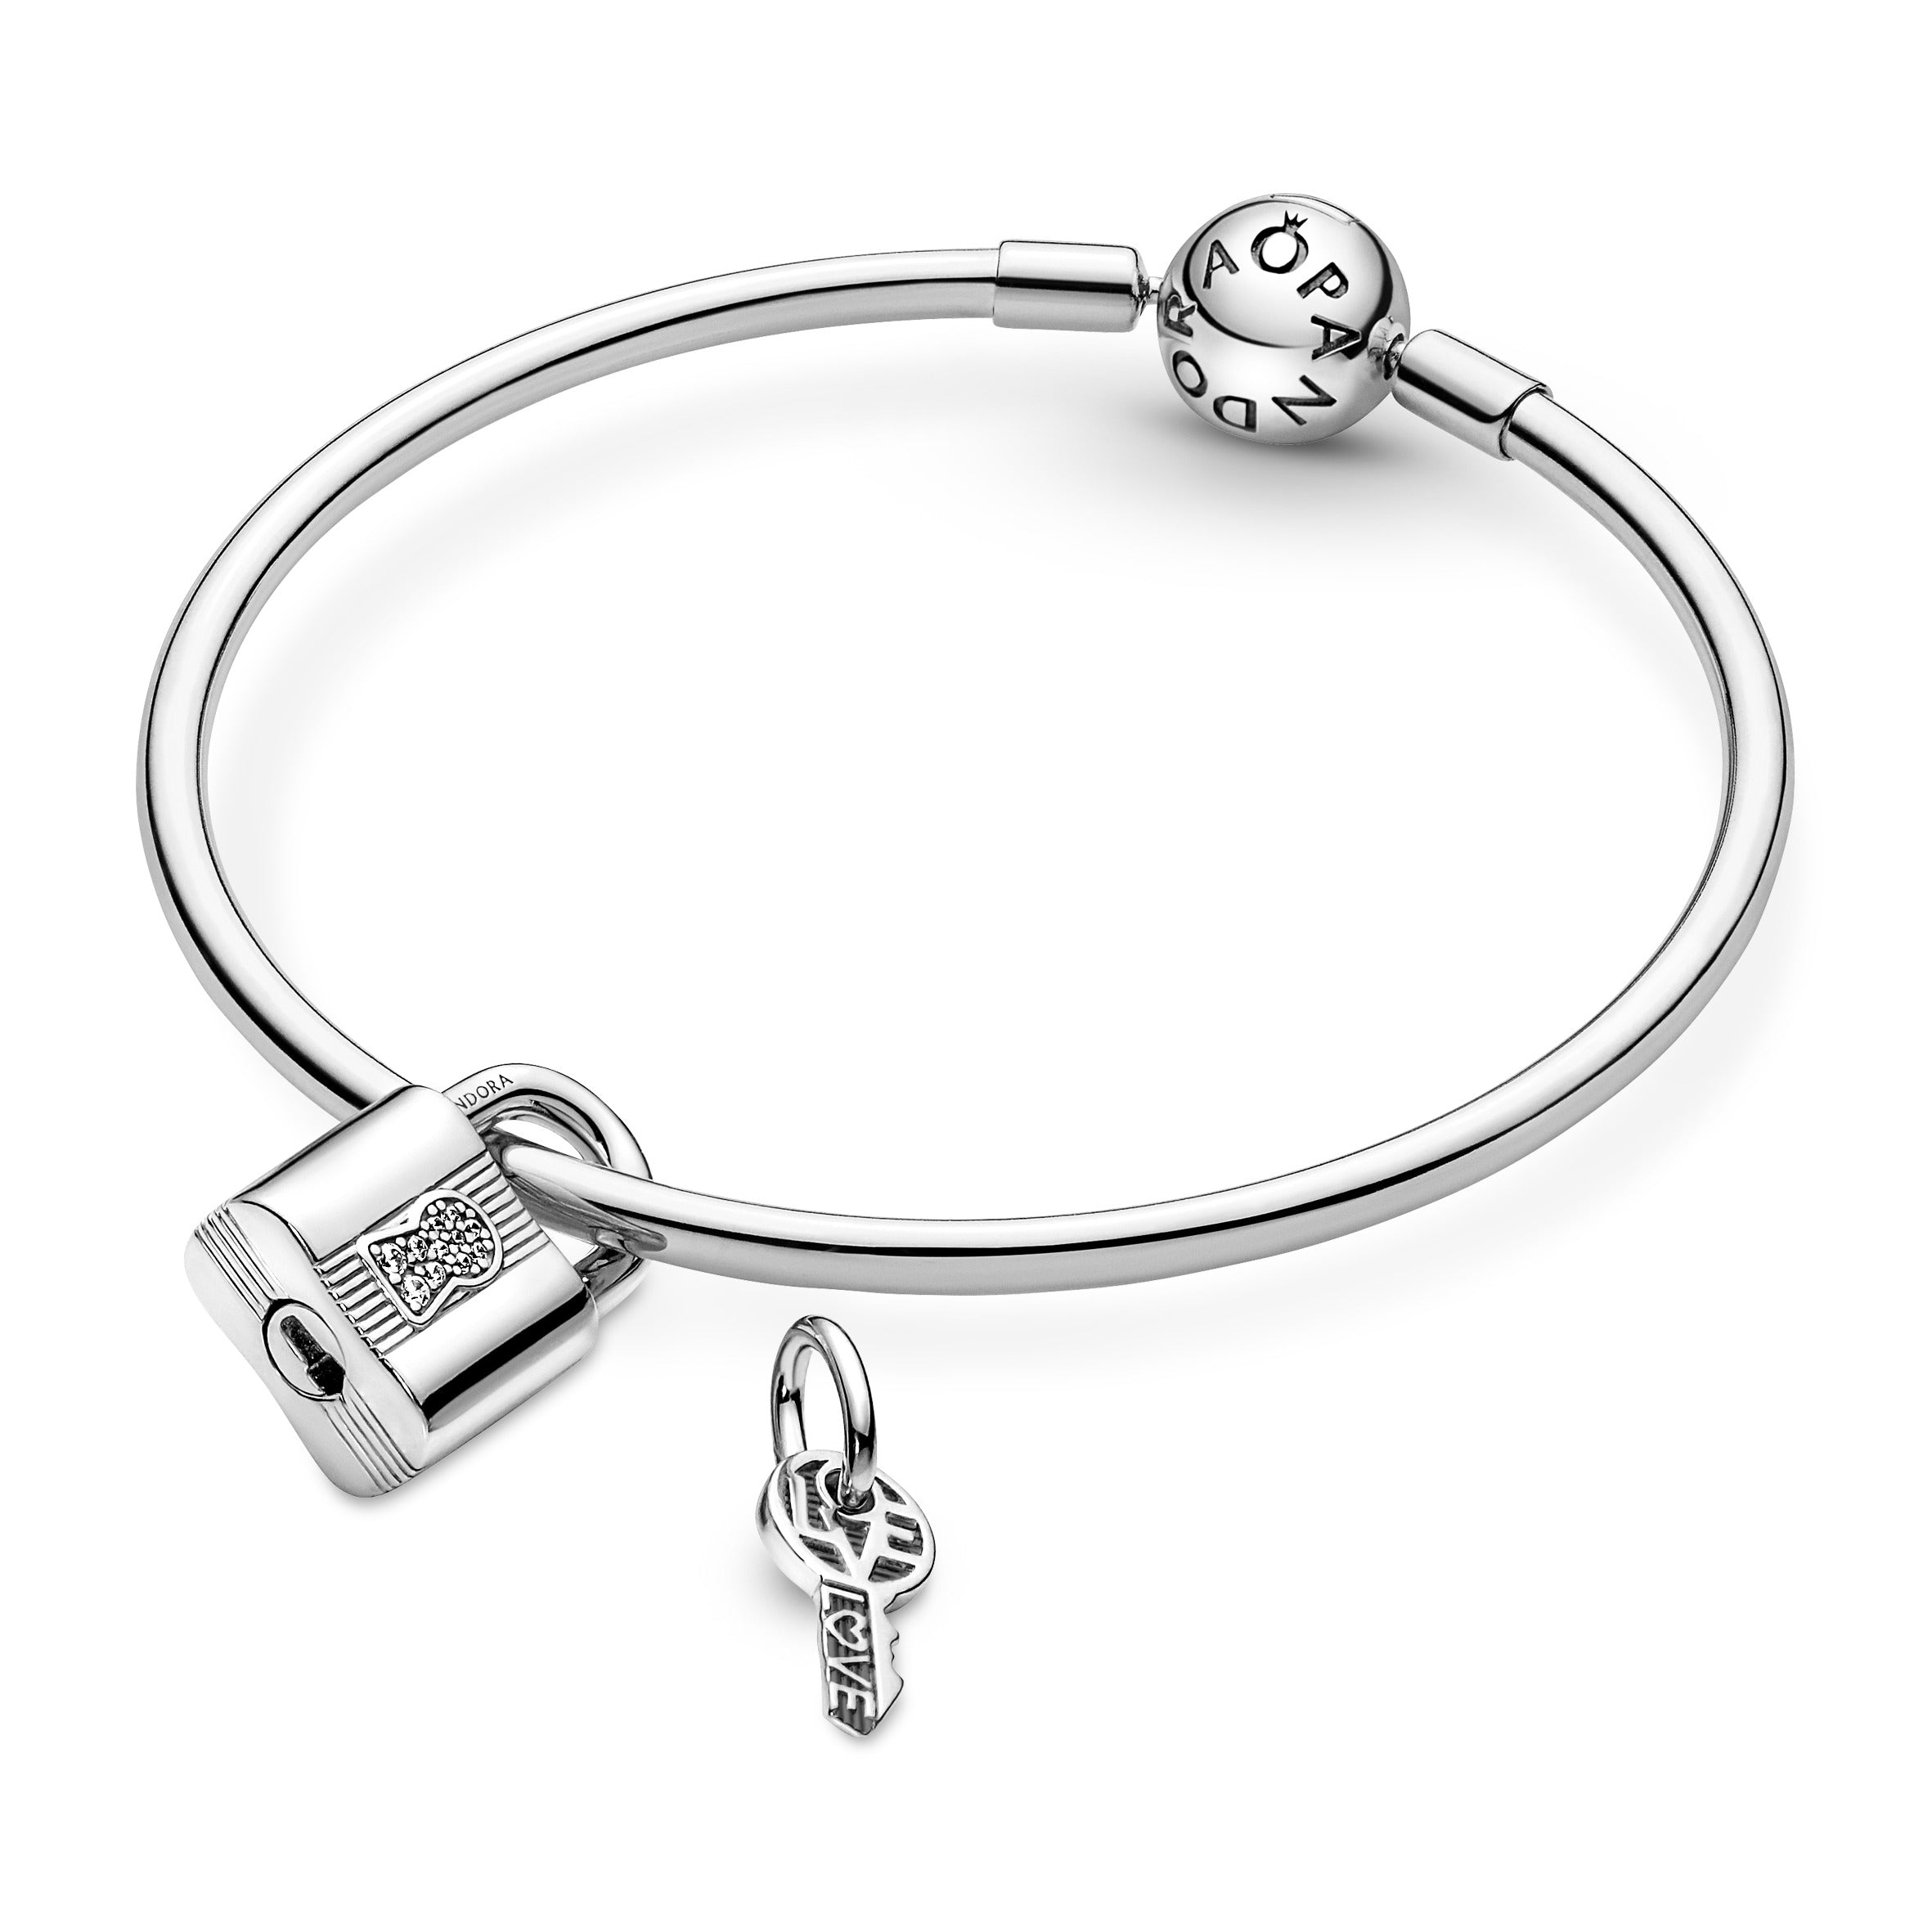 NEW 100% Authentic PANDORA 925 Padlock and Key Charm Bracelet Gift Set  B801720 | eBay